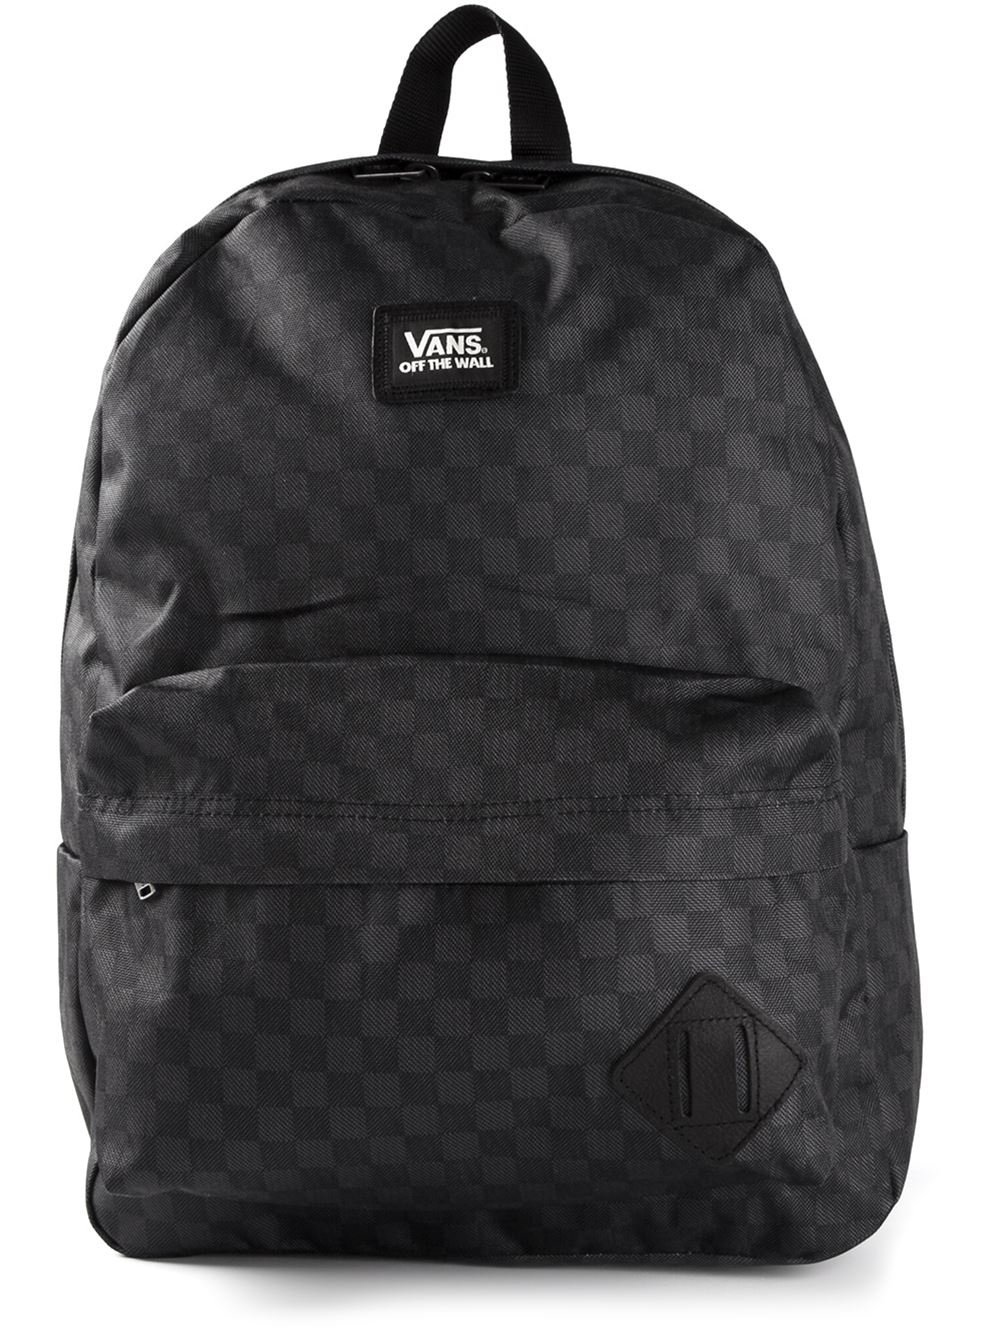 Vans Checkered Backpack in Black for |